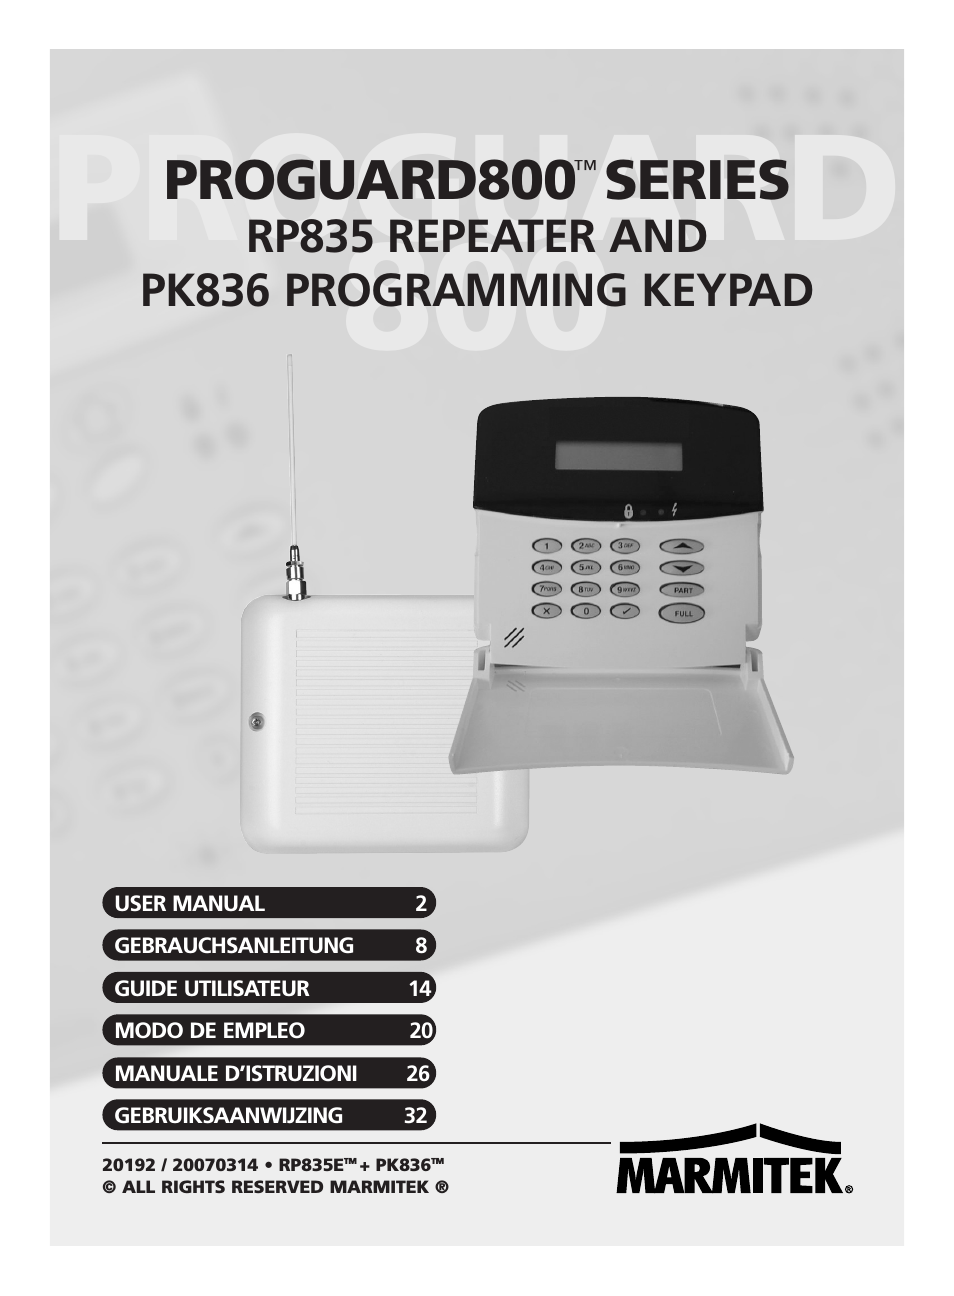 PROGUARD800 Series PK836